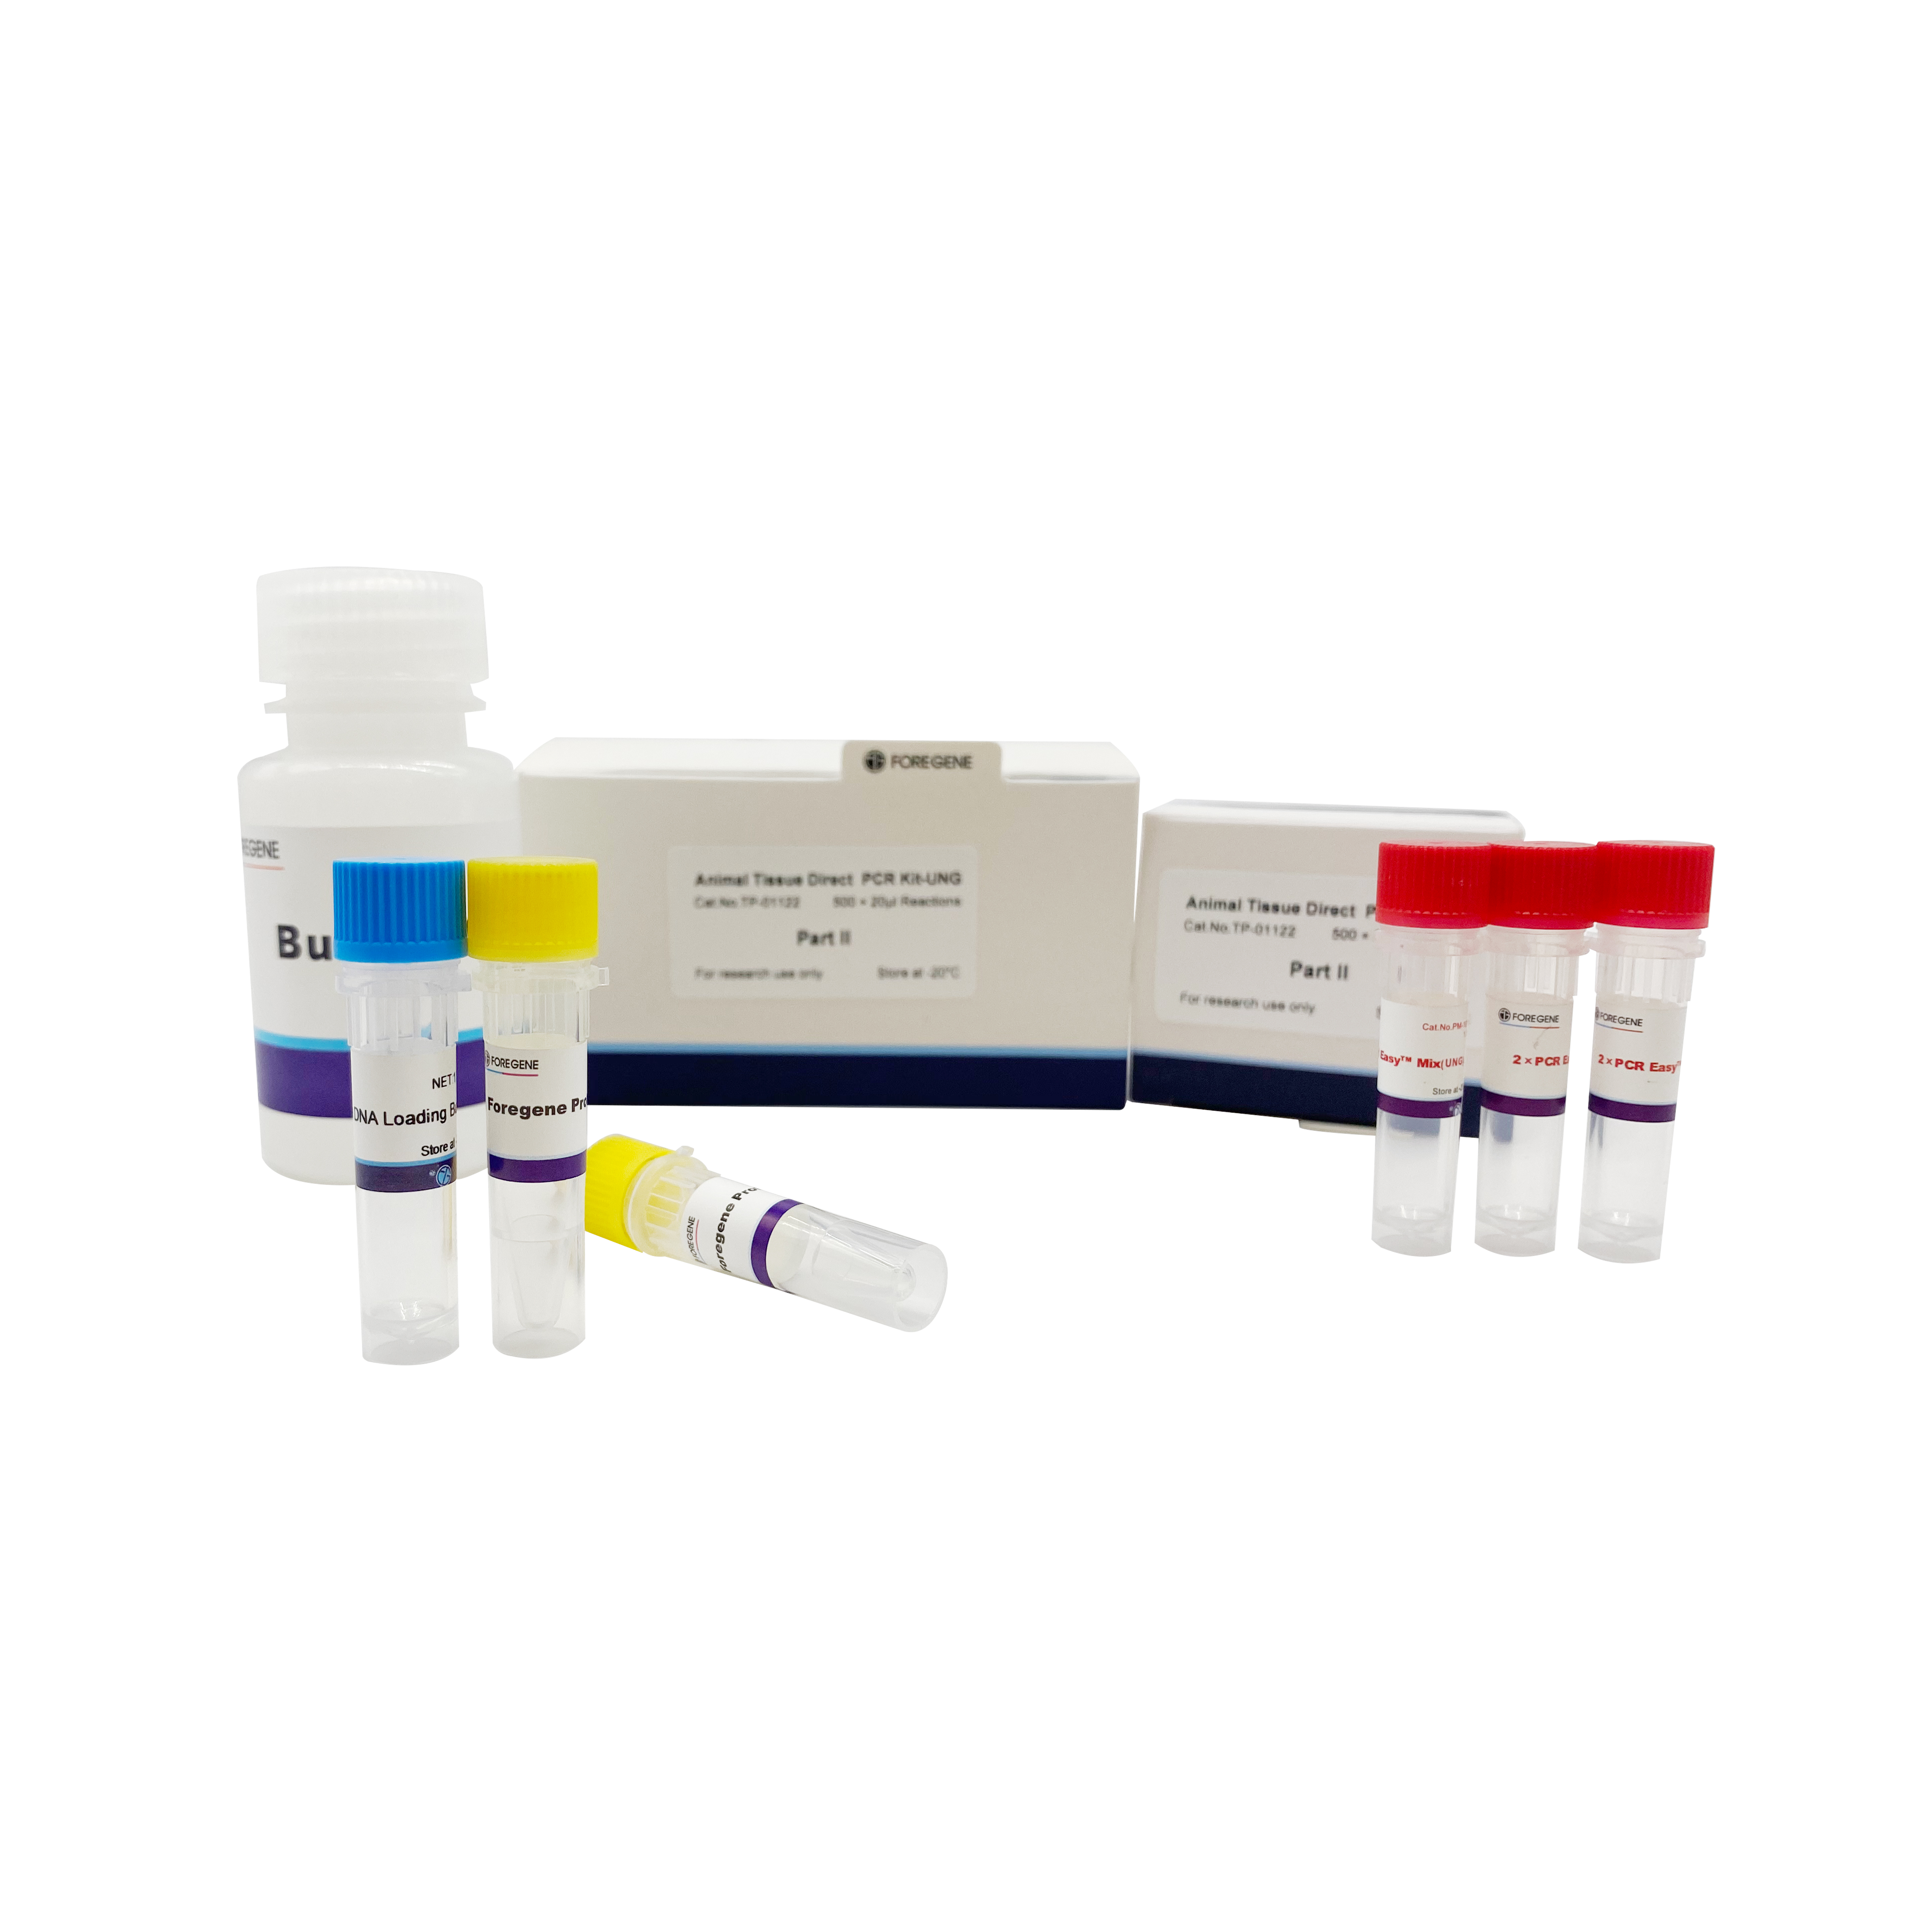 Animal Tissue Direct PCR kit-UNG (ไม่มีการสกัดดีเอ็นเอ)